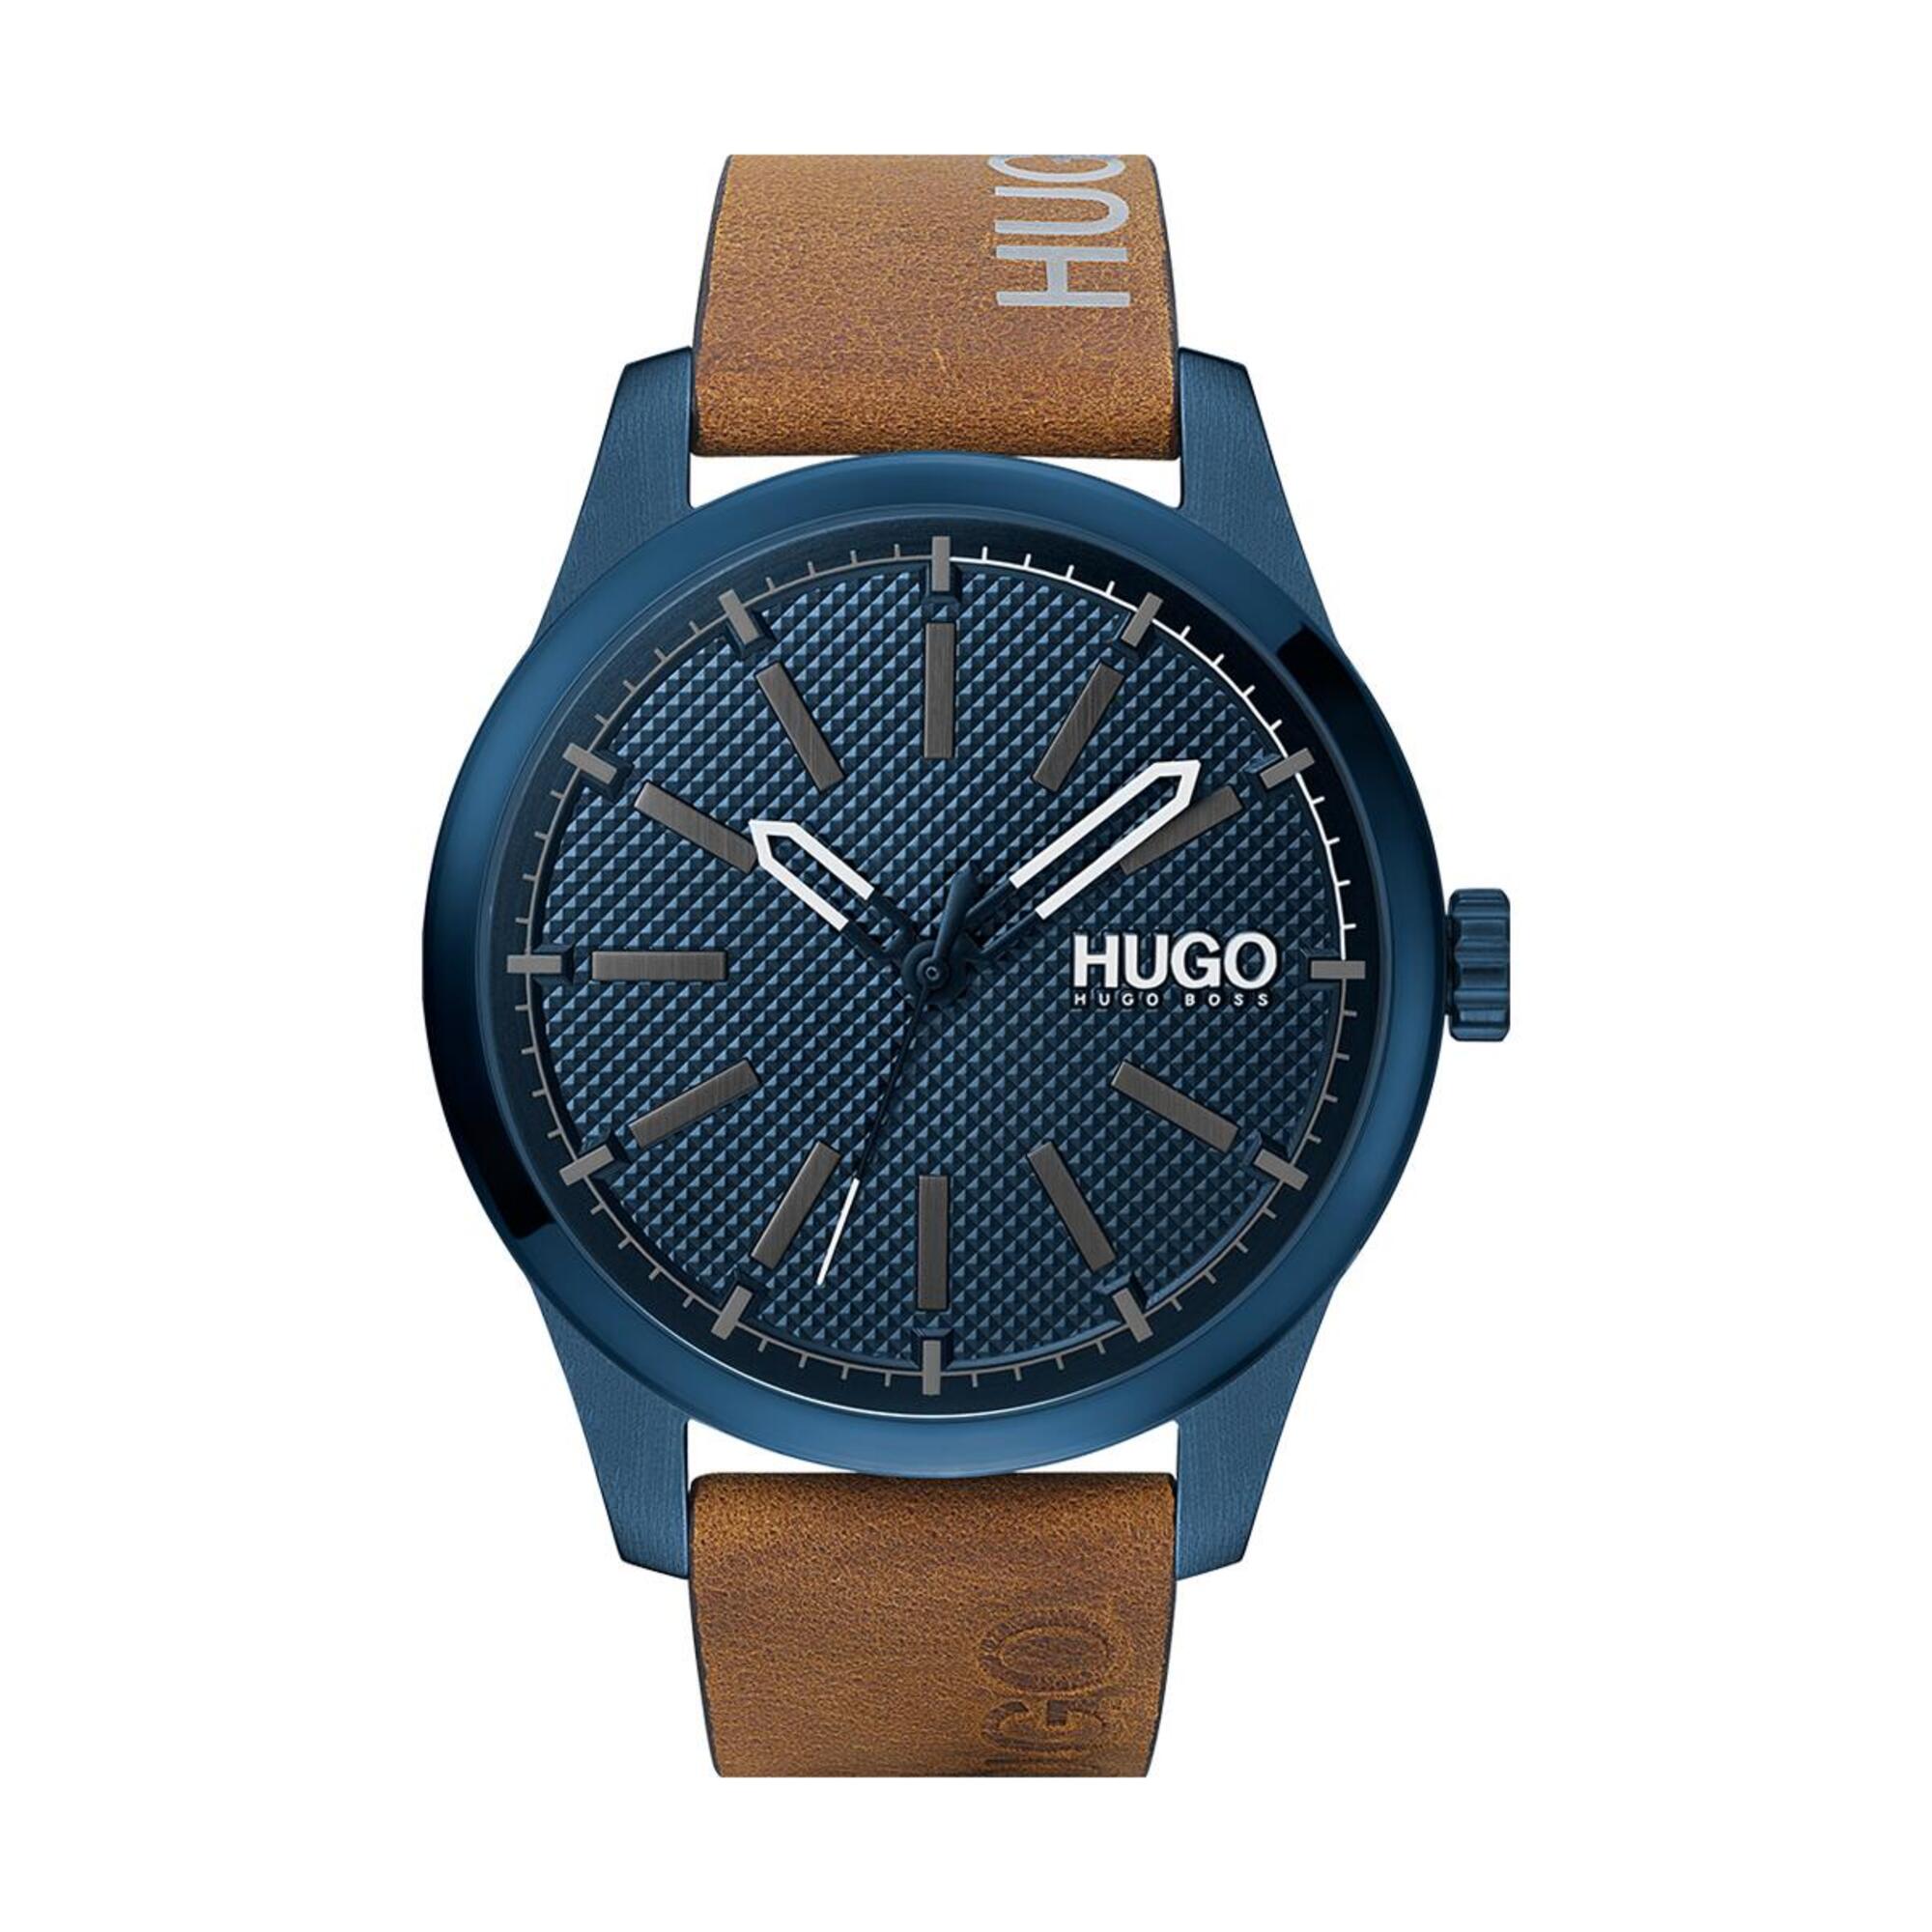 Hugo Boss Hugo Invent orologio